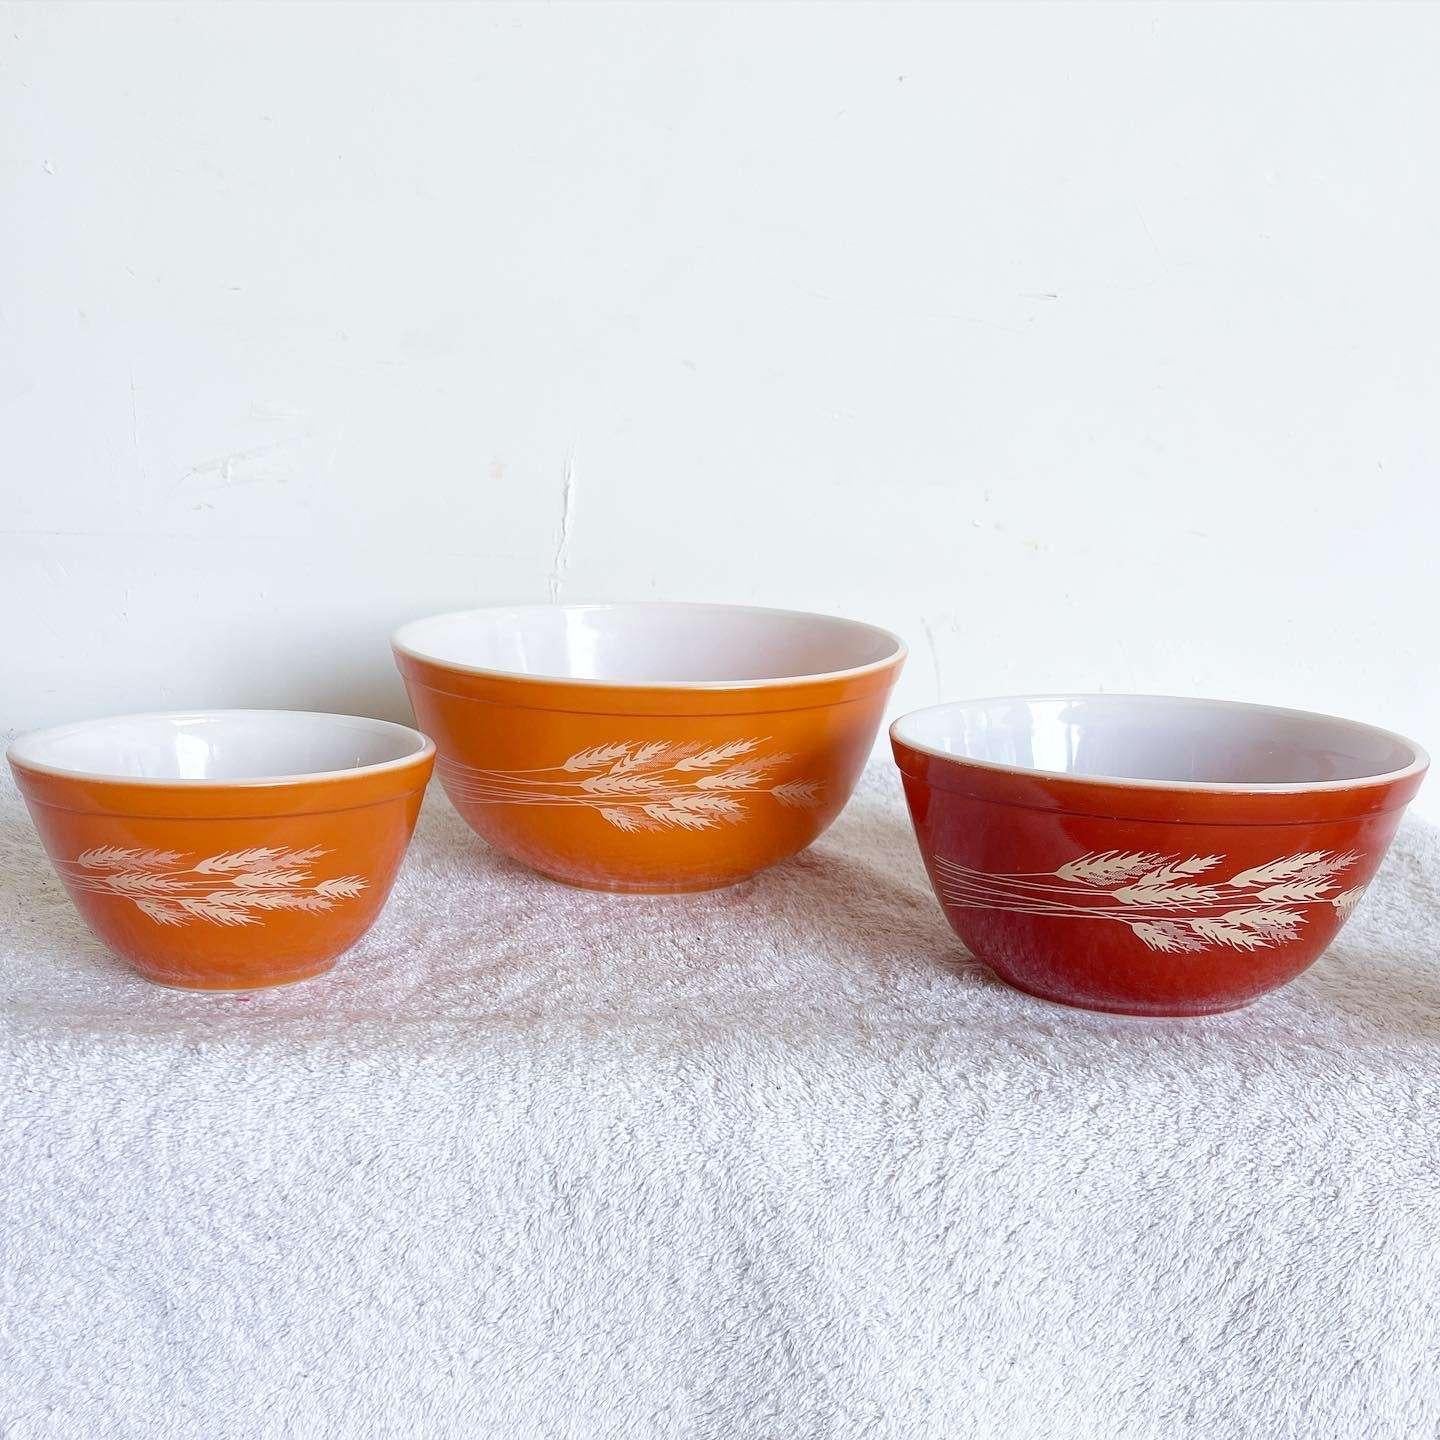 Vintage Autumn Harvest Bowls by Pyrex - Set of 3